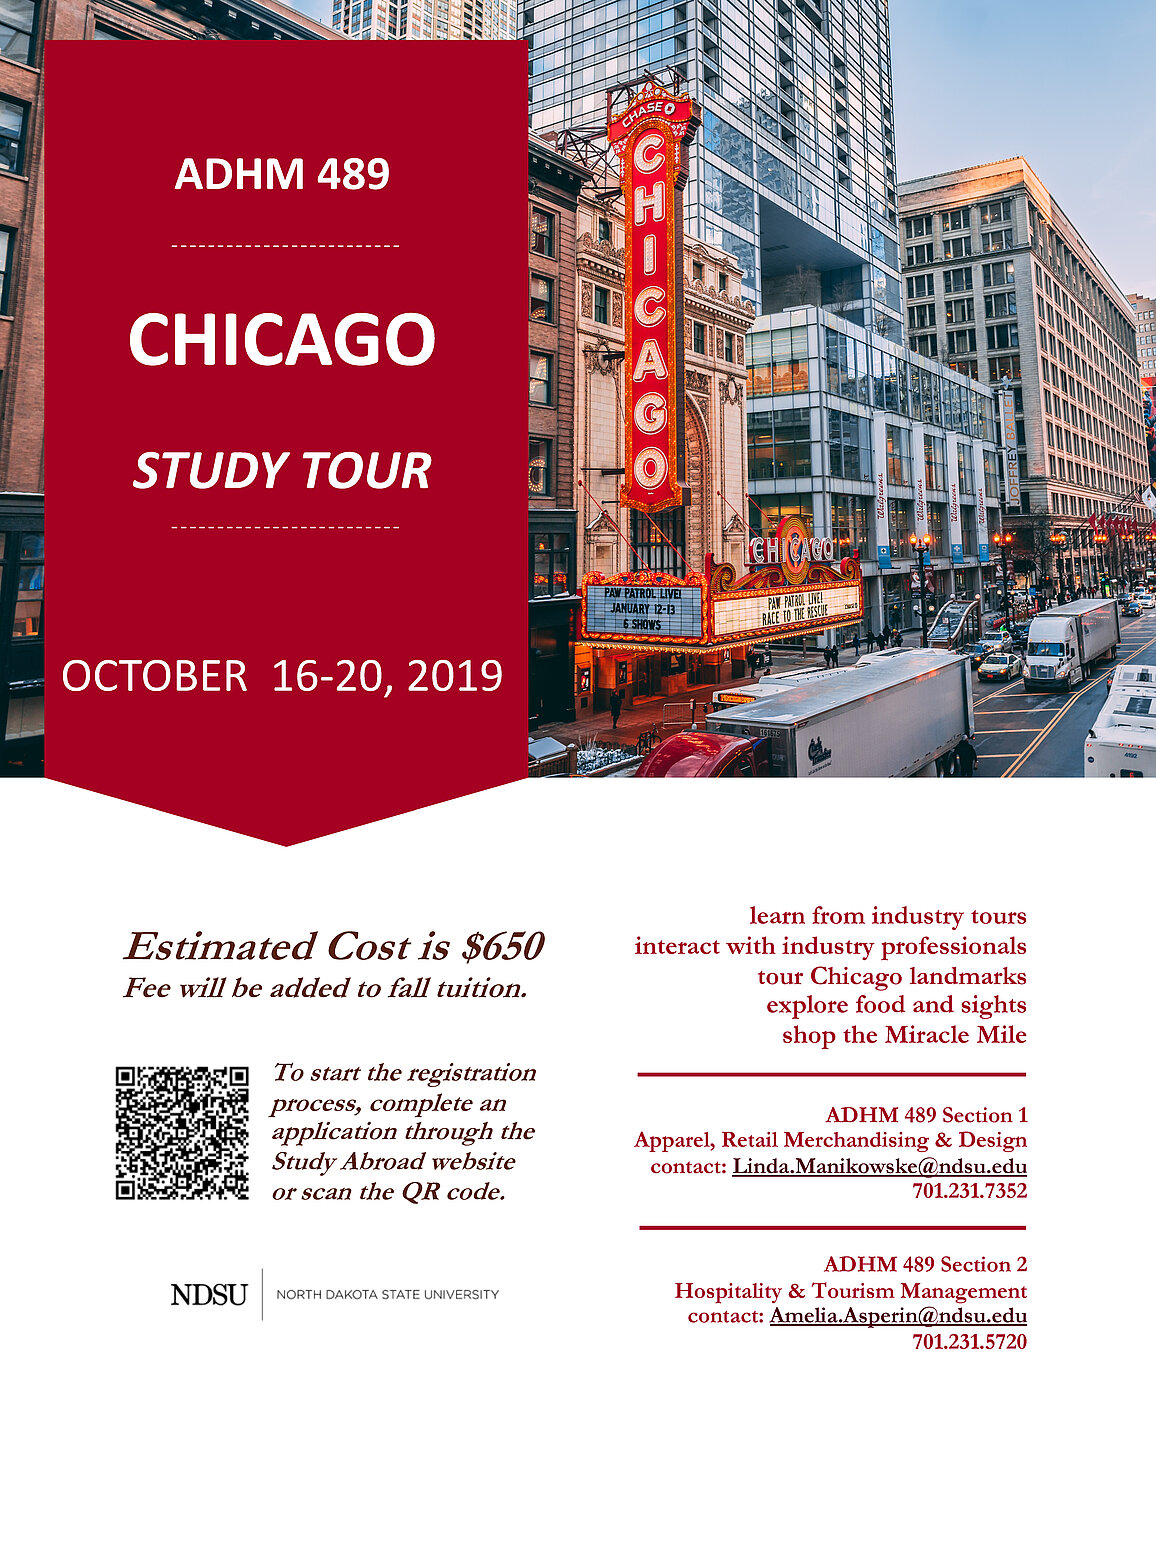 Chicago Study Tour 2019 flier